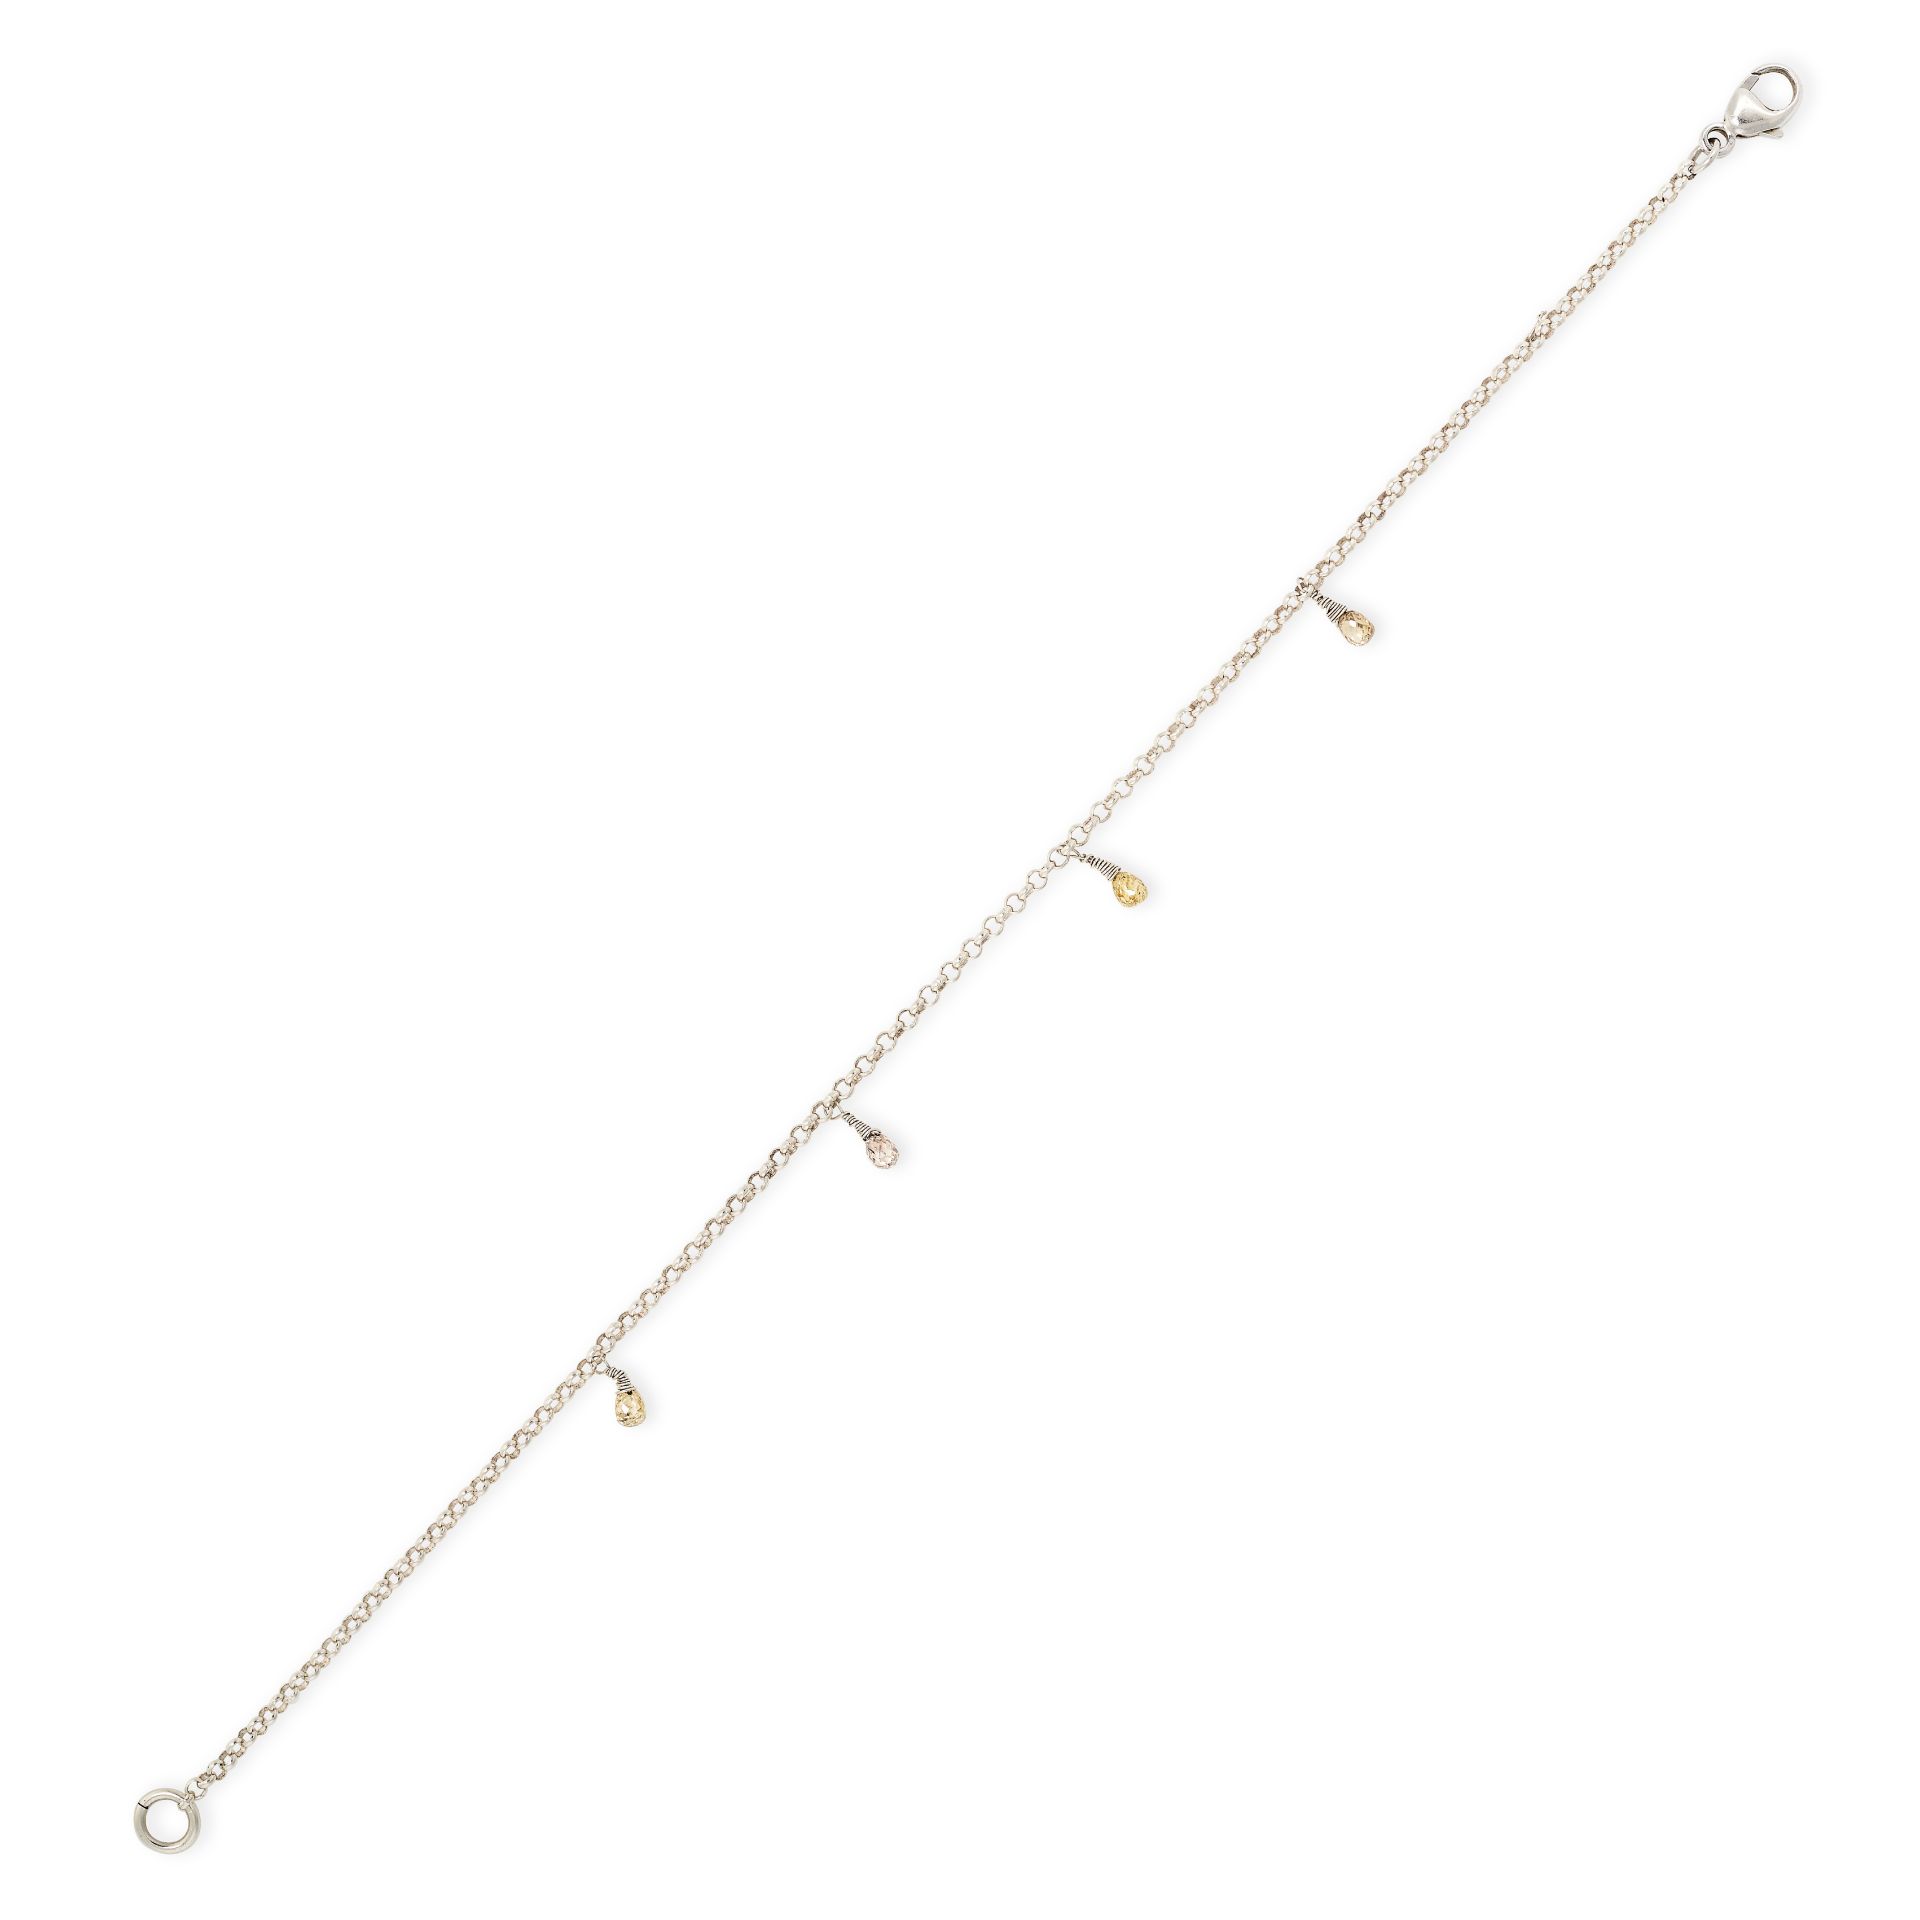 A YELLOW DIAMOND BRACELET comprising a belcher link chain suspending four yellow diamond briolettes,